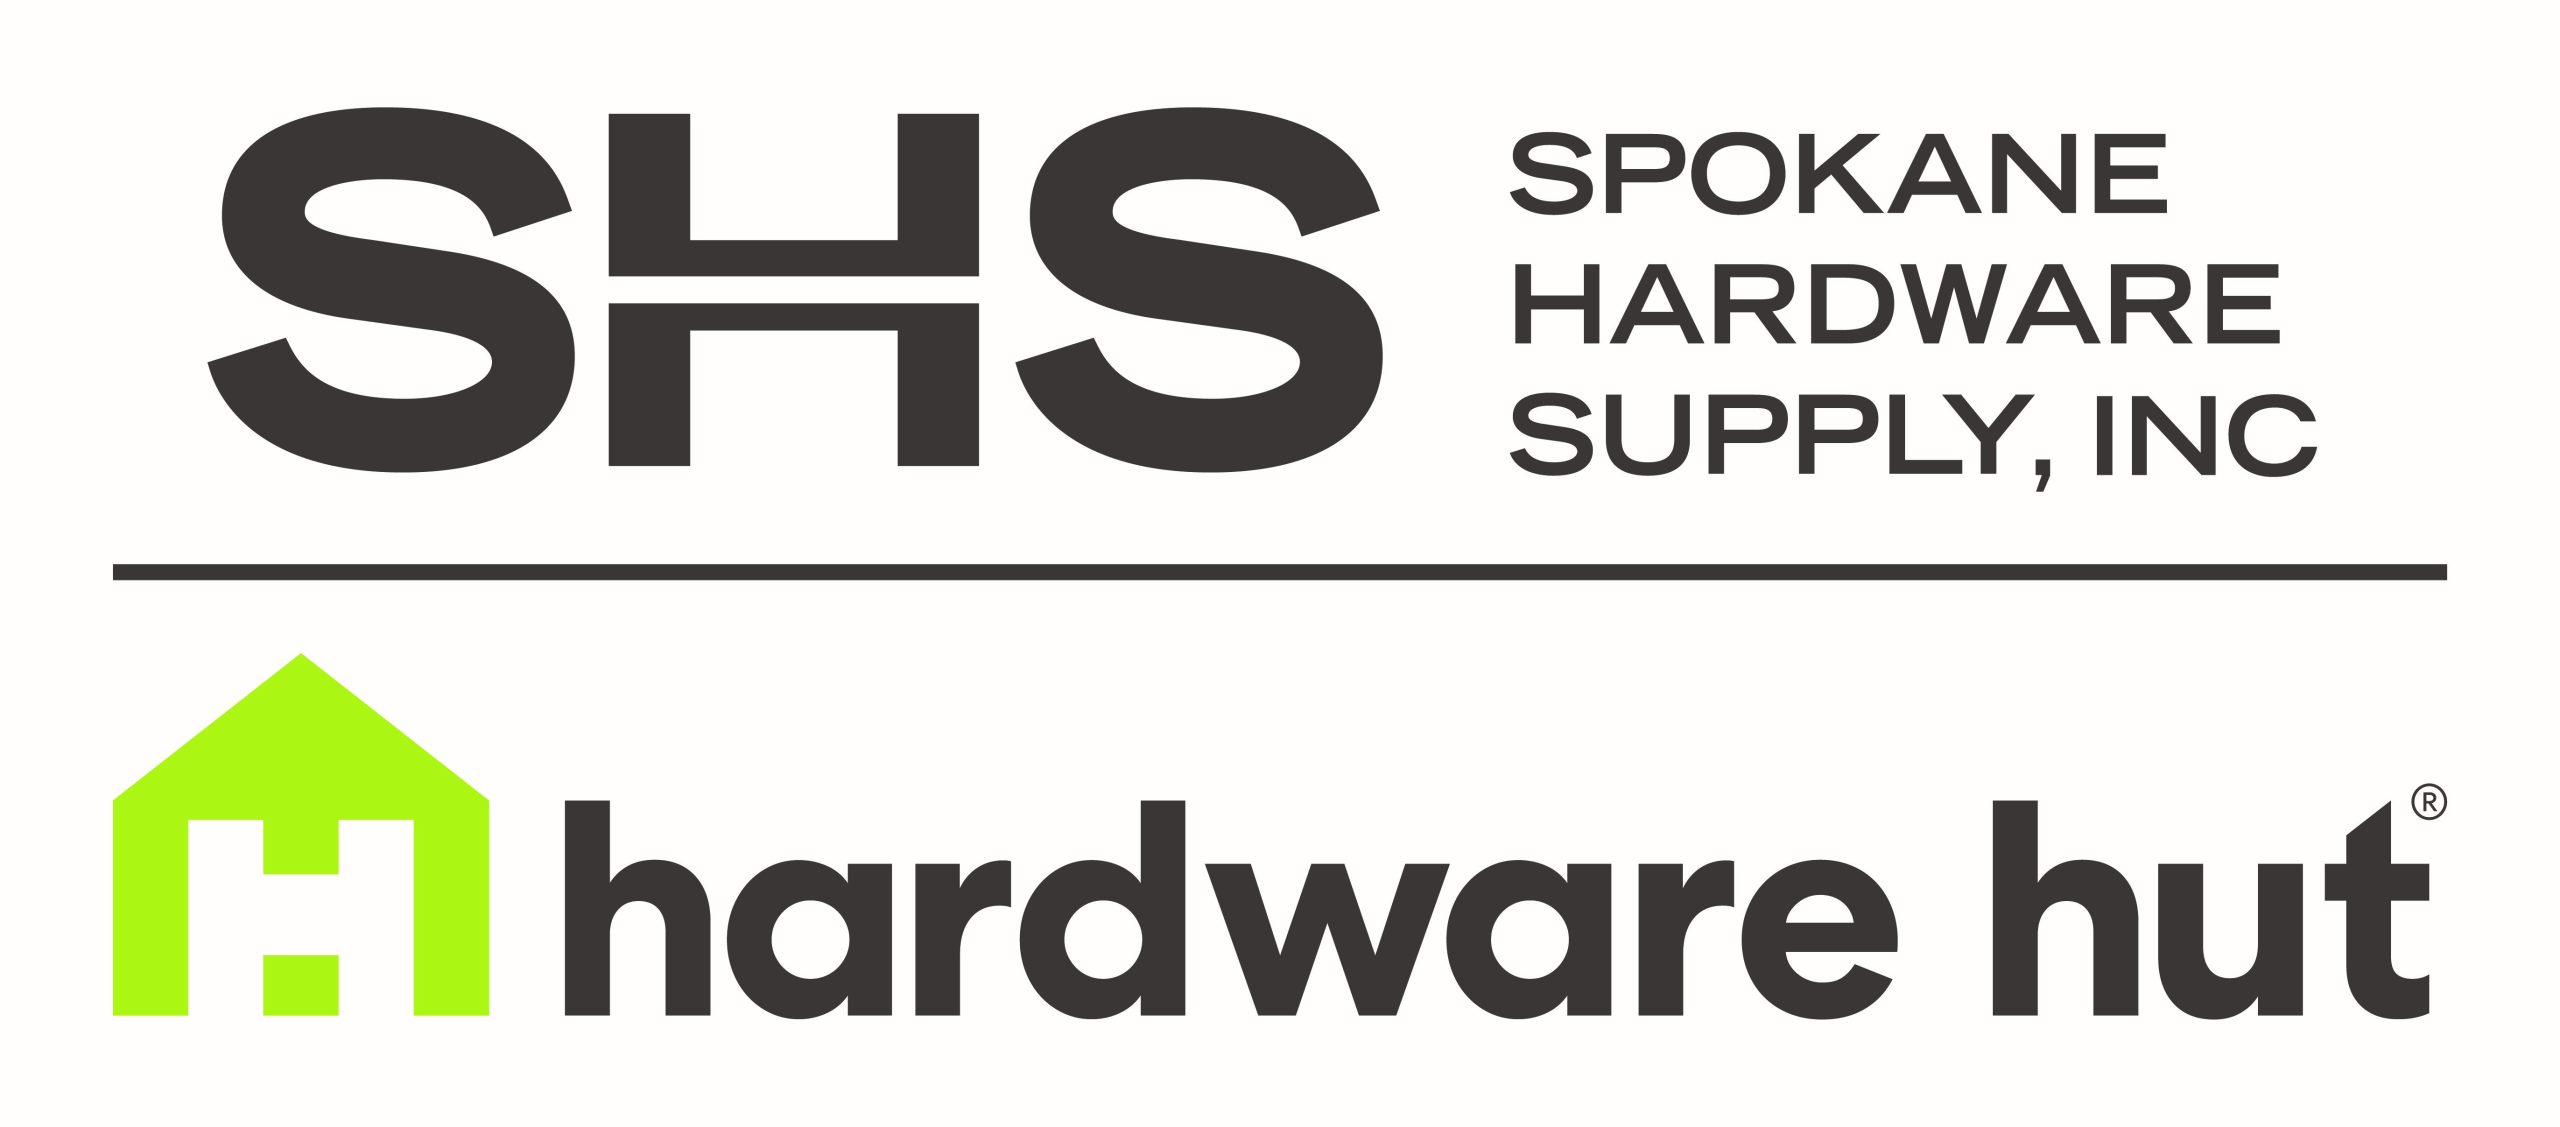 Spokane Hardware Supply logo